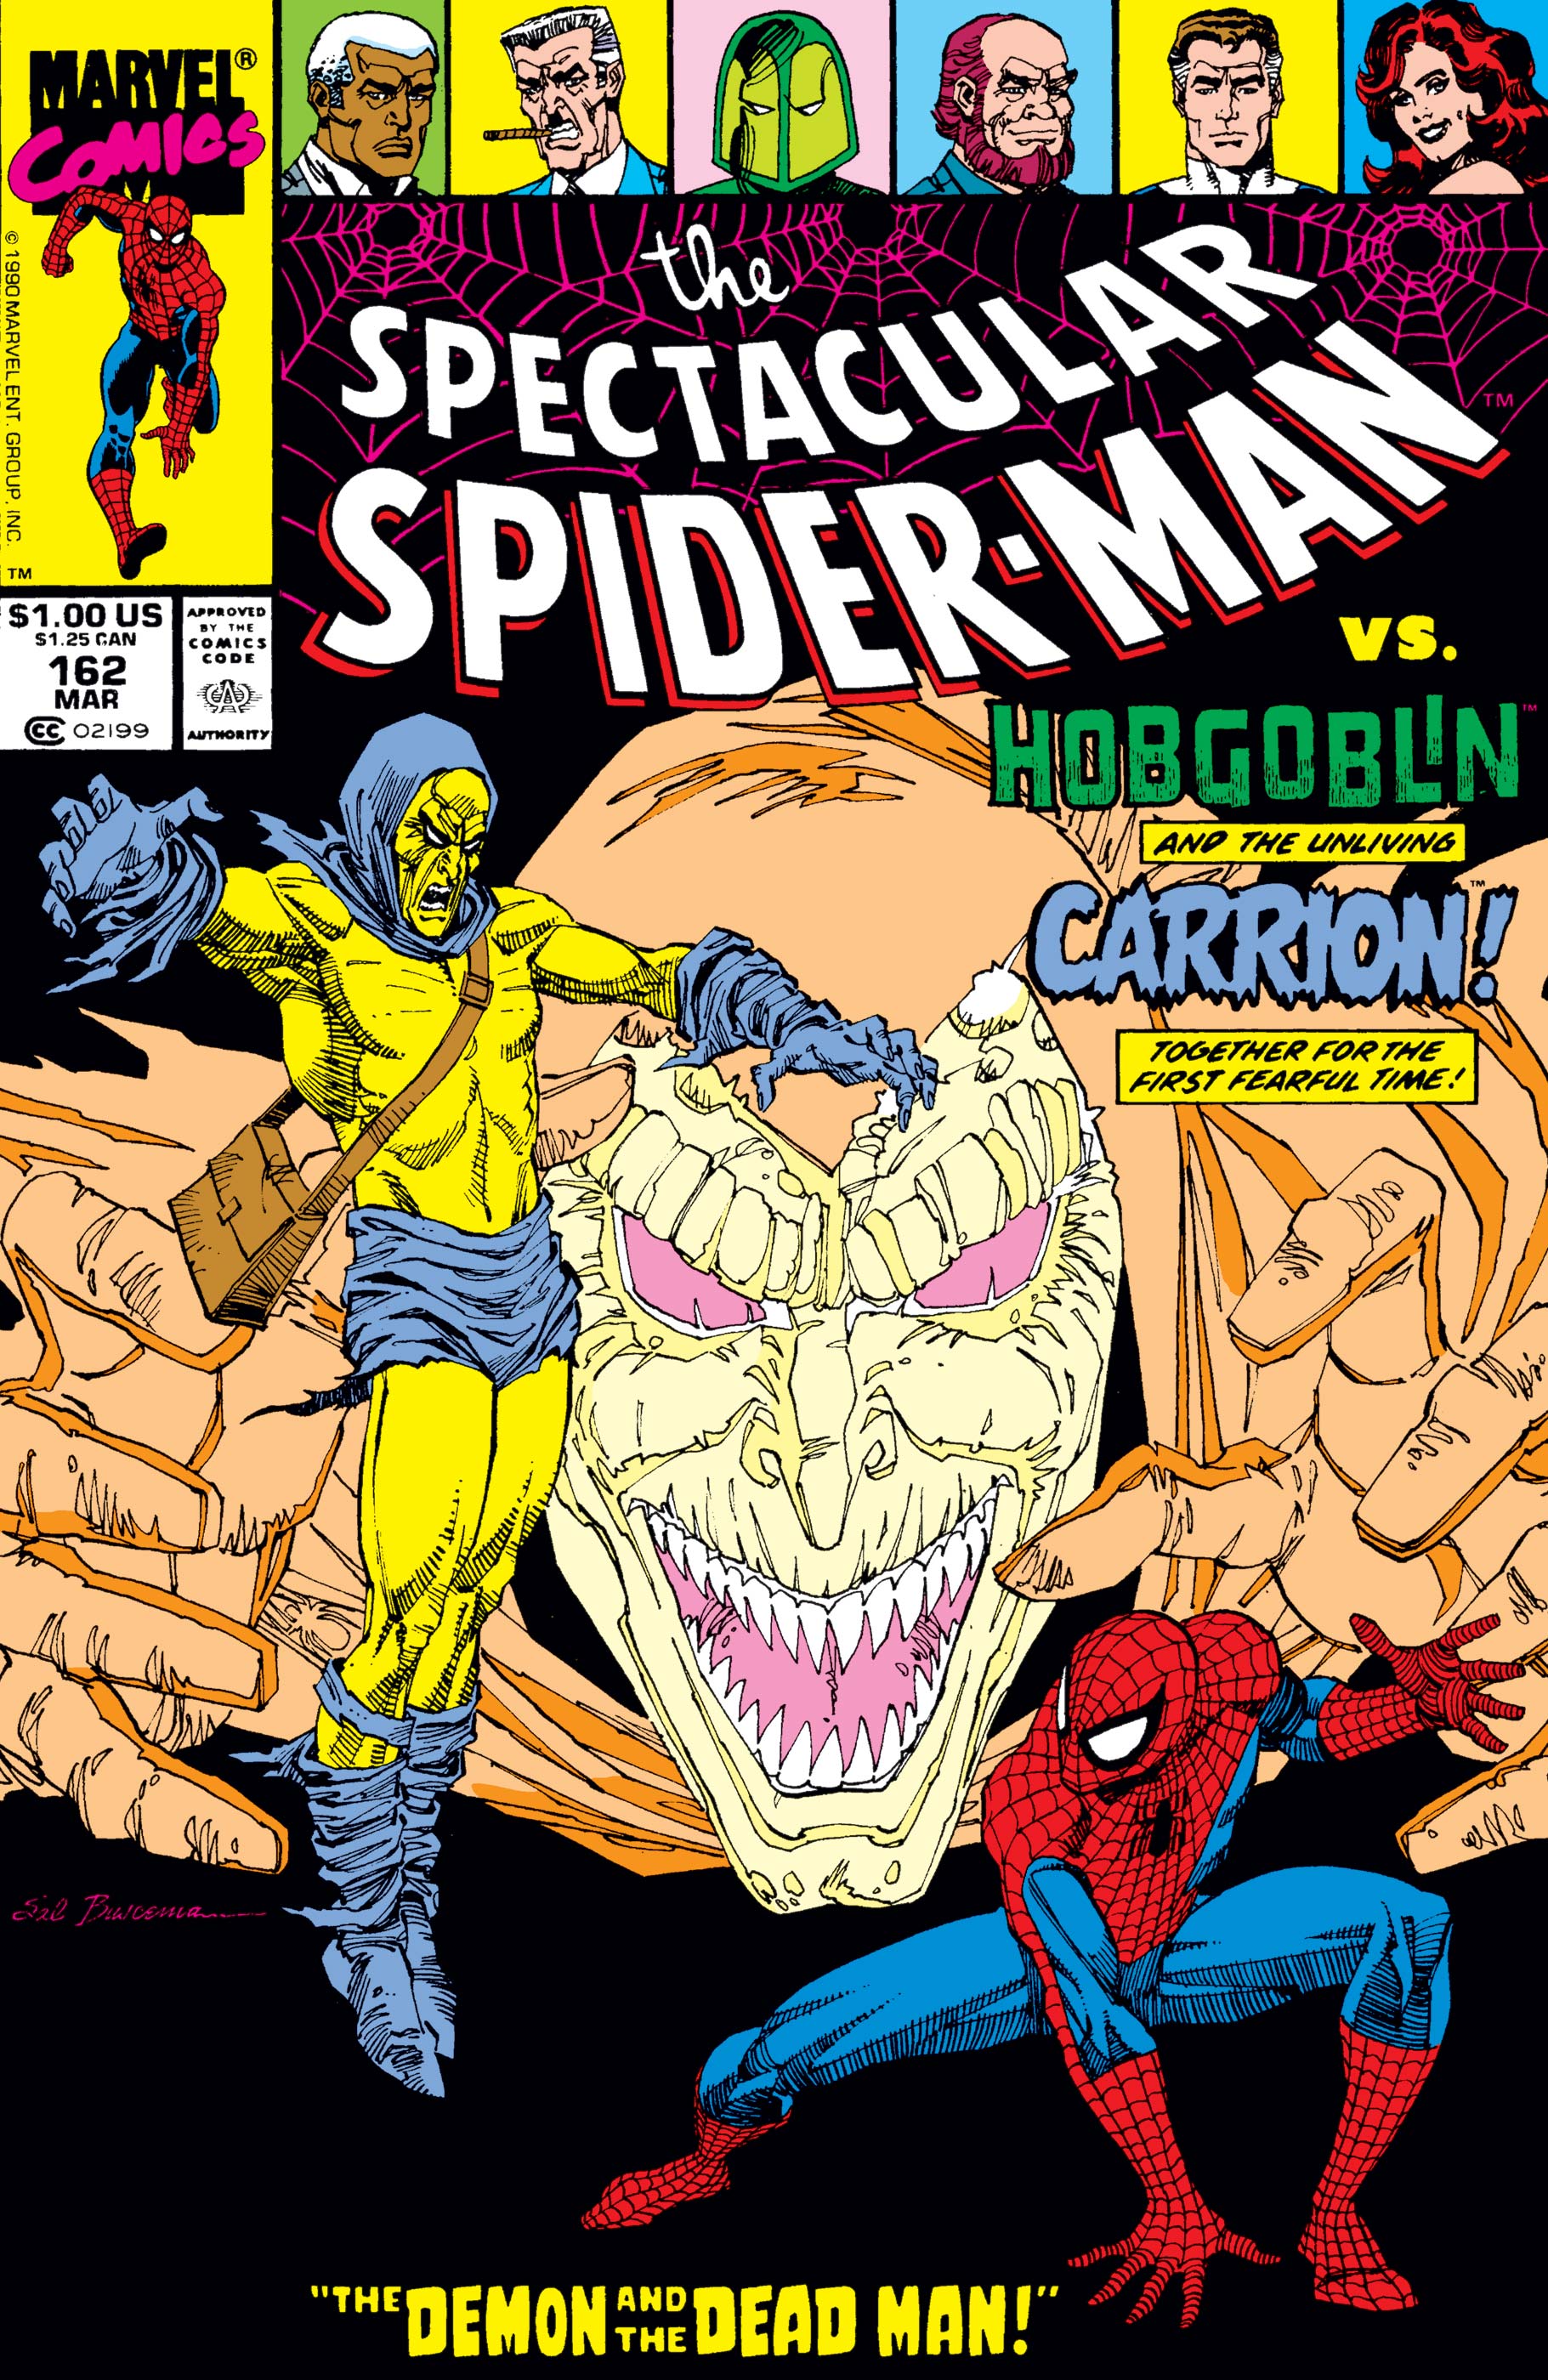 Peter Parker, the Spectacular Spider-Man (1976) #162